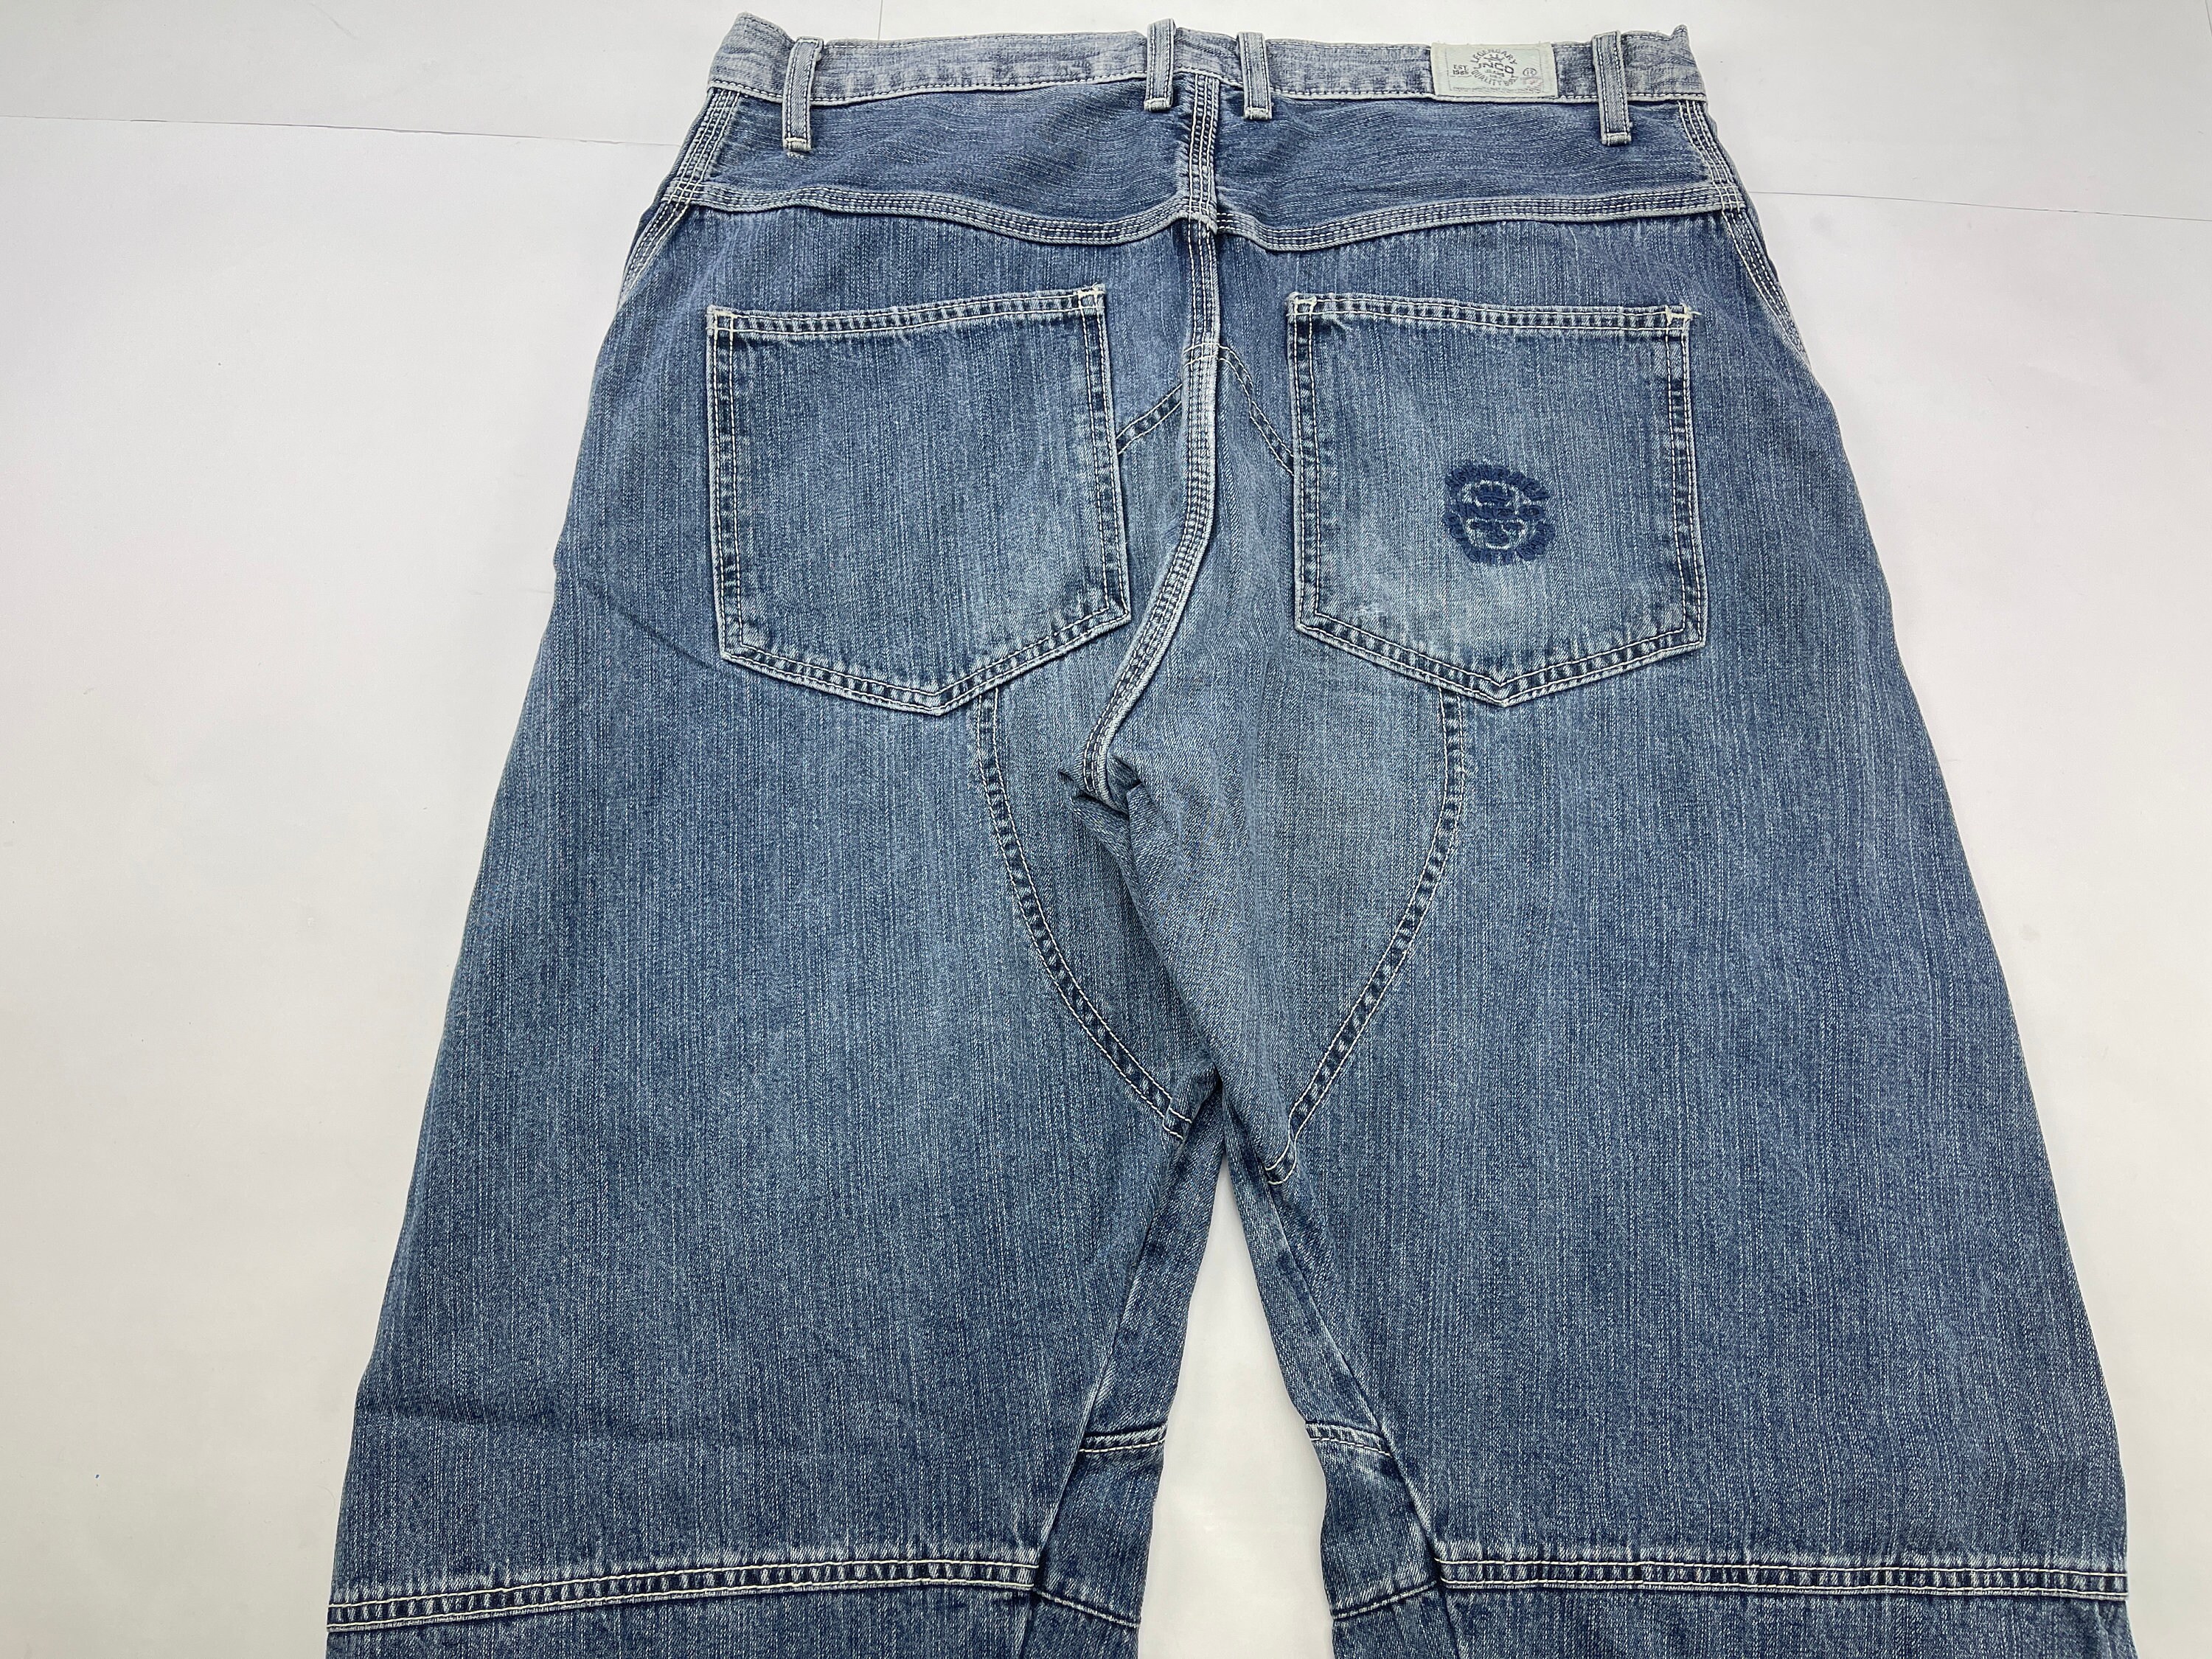 JNCO jeans blue vintage Judge None Choose One baggy pants | Etsy